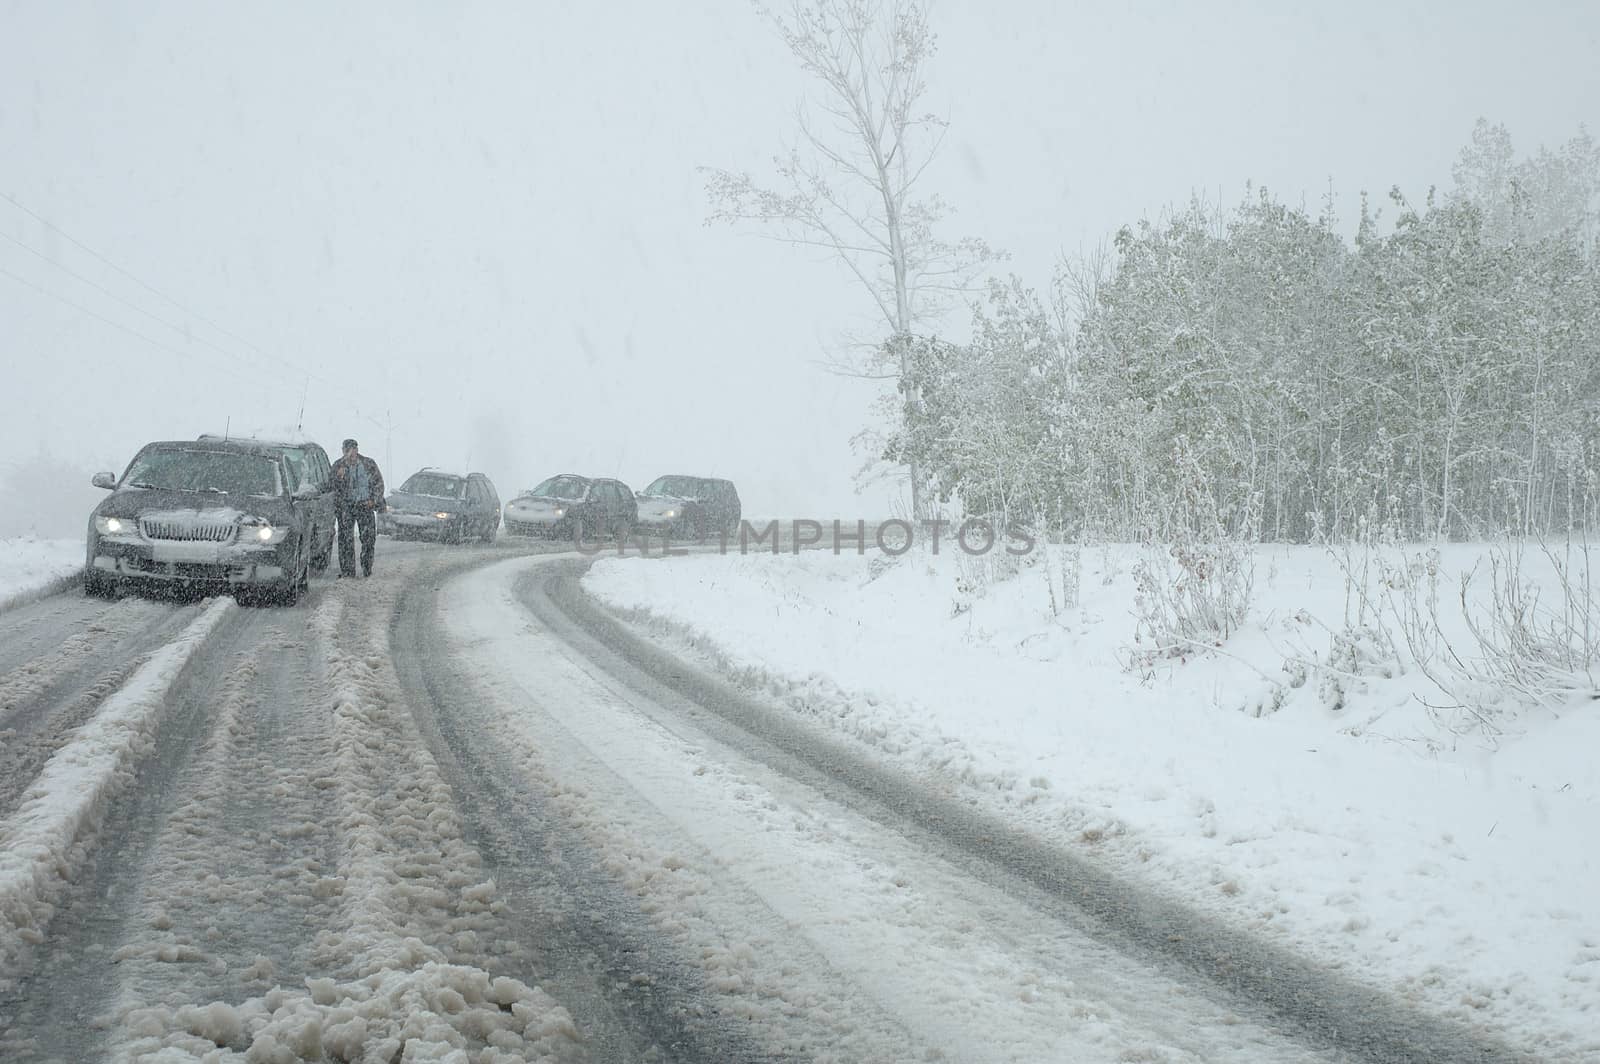 JELENIA GORA, POLAND - MAY 03: Traffic jam on mountain road caused by heavy snowfall on 03.05.2011 nearby Jelenia G�ra Poland